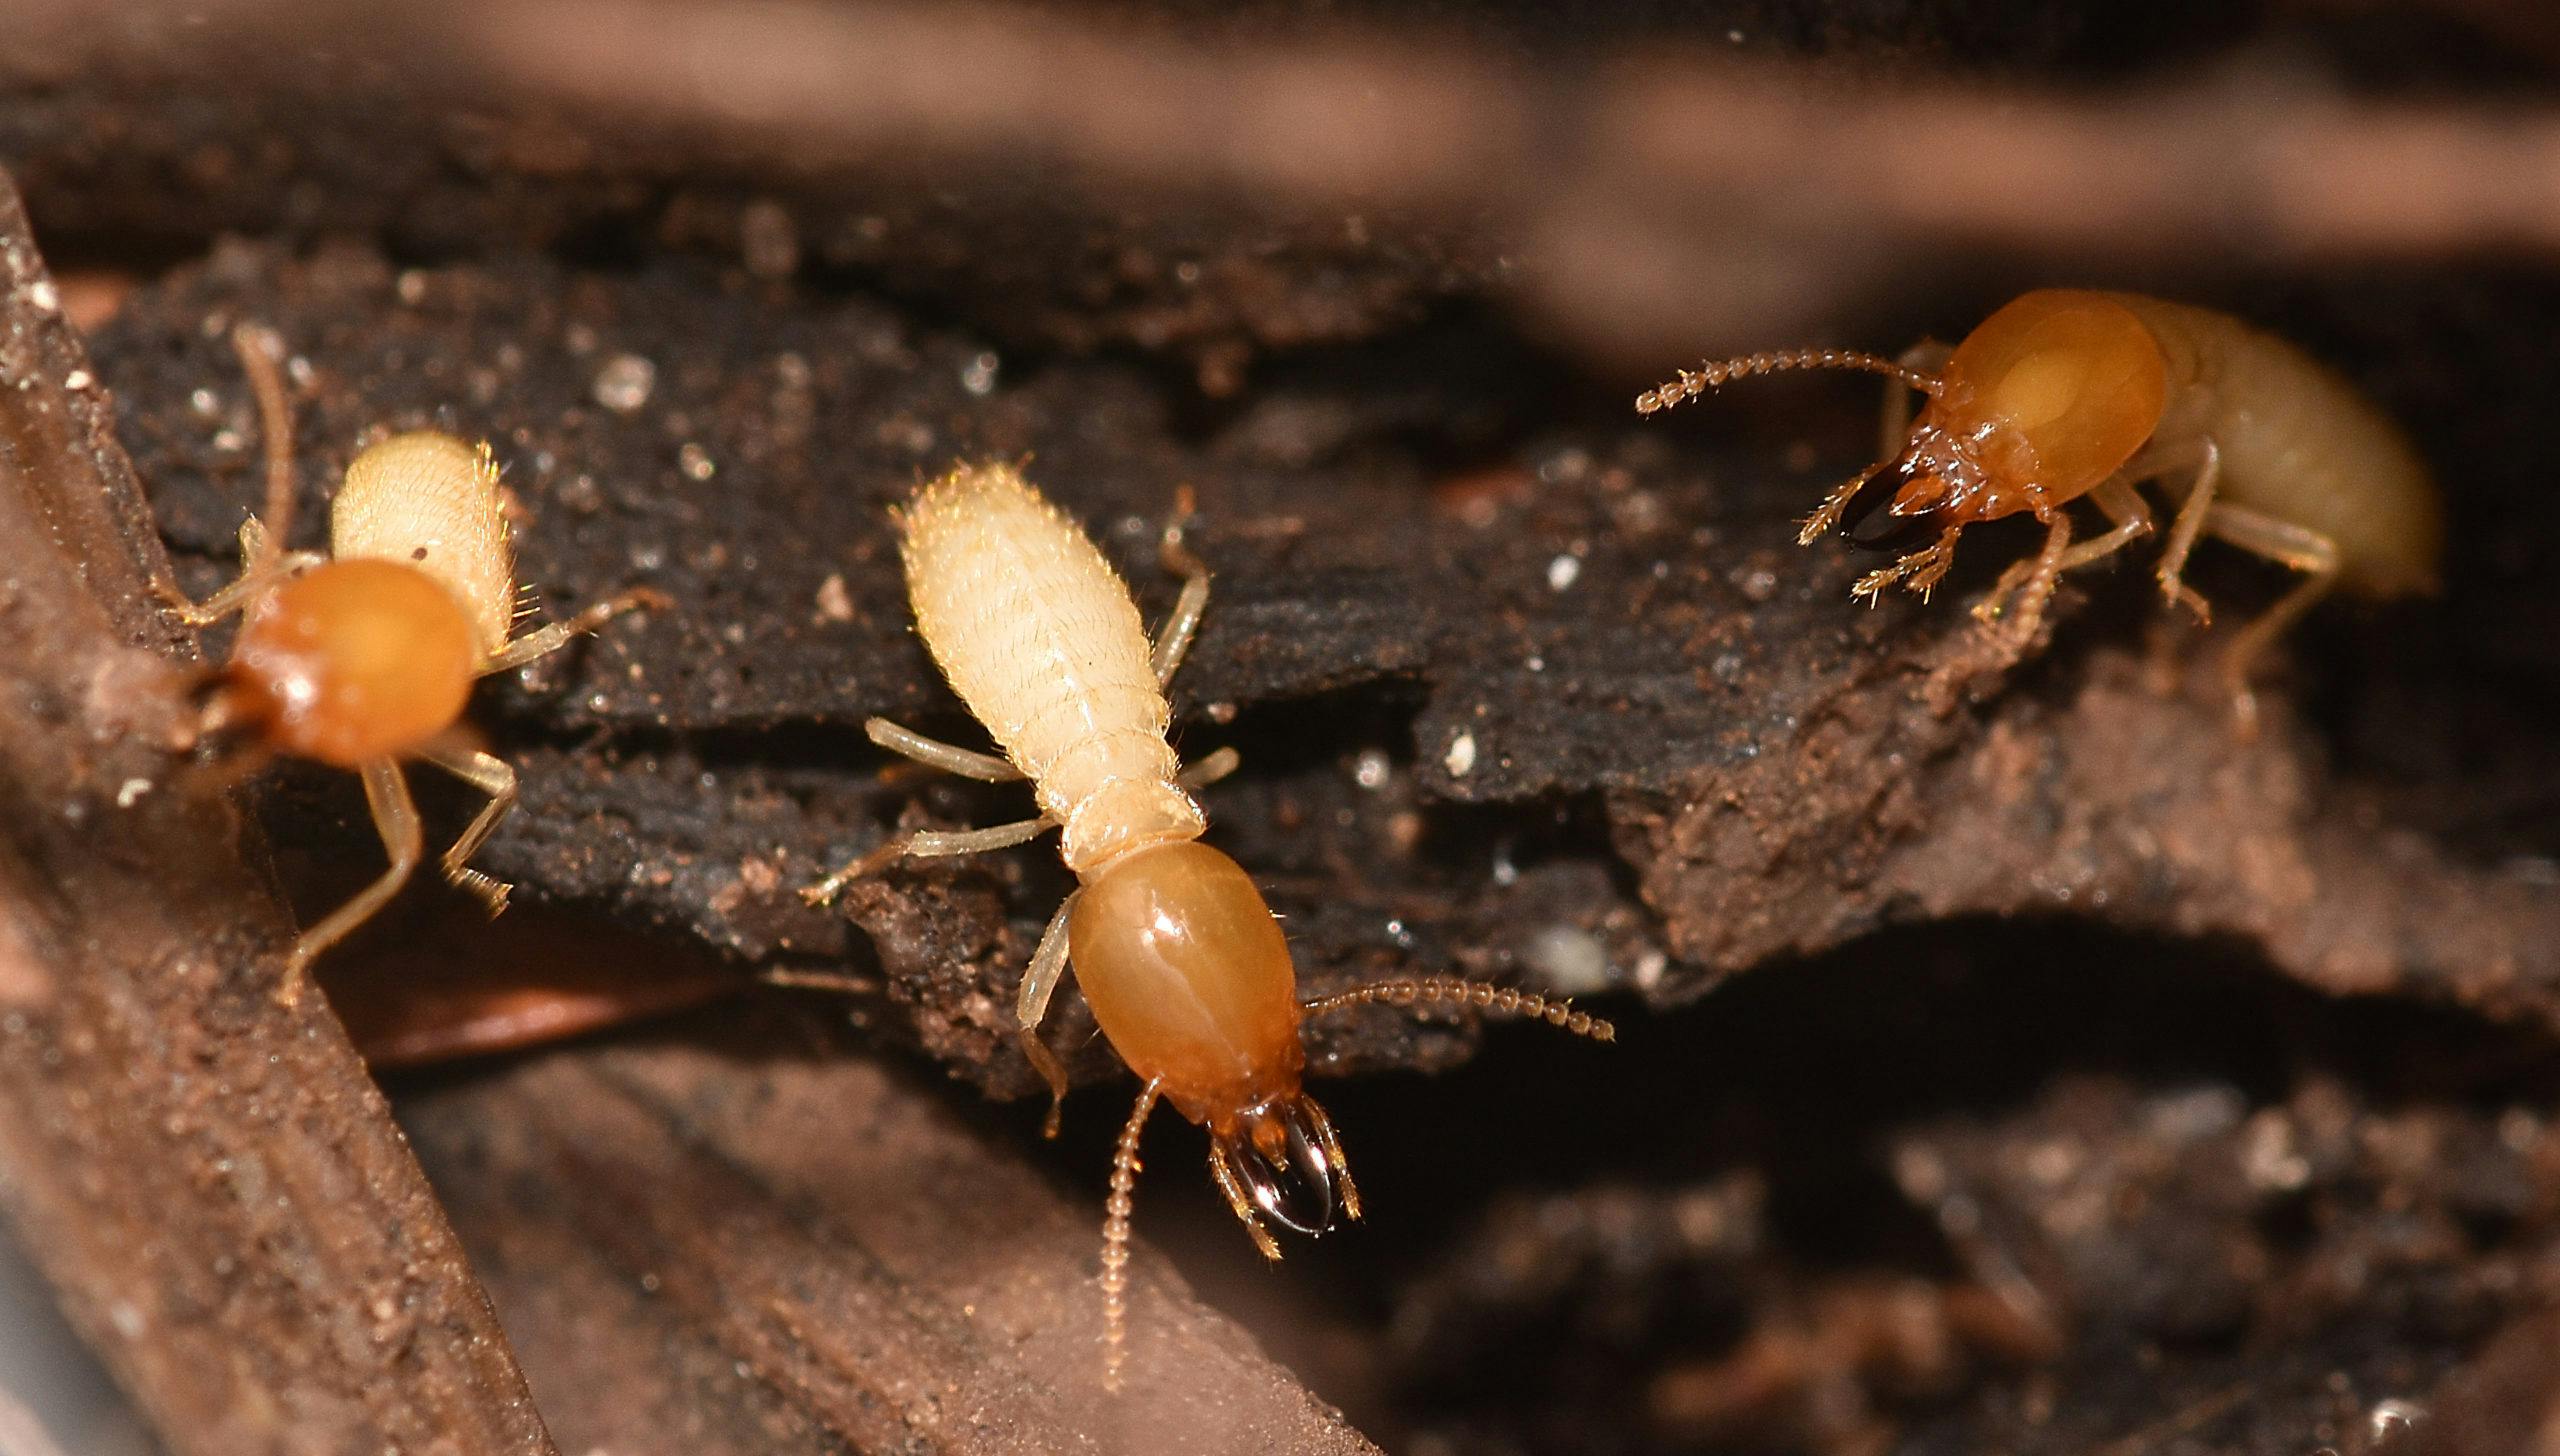 Formosan termite